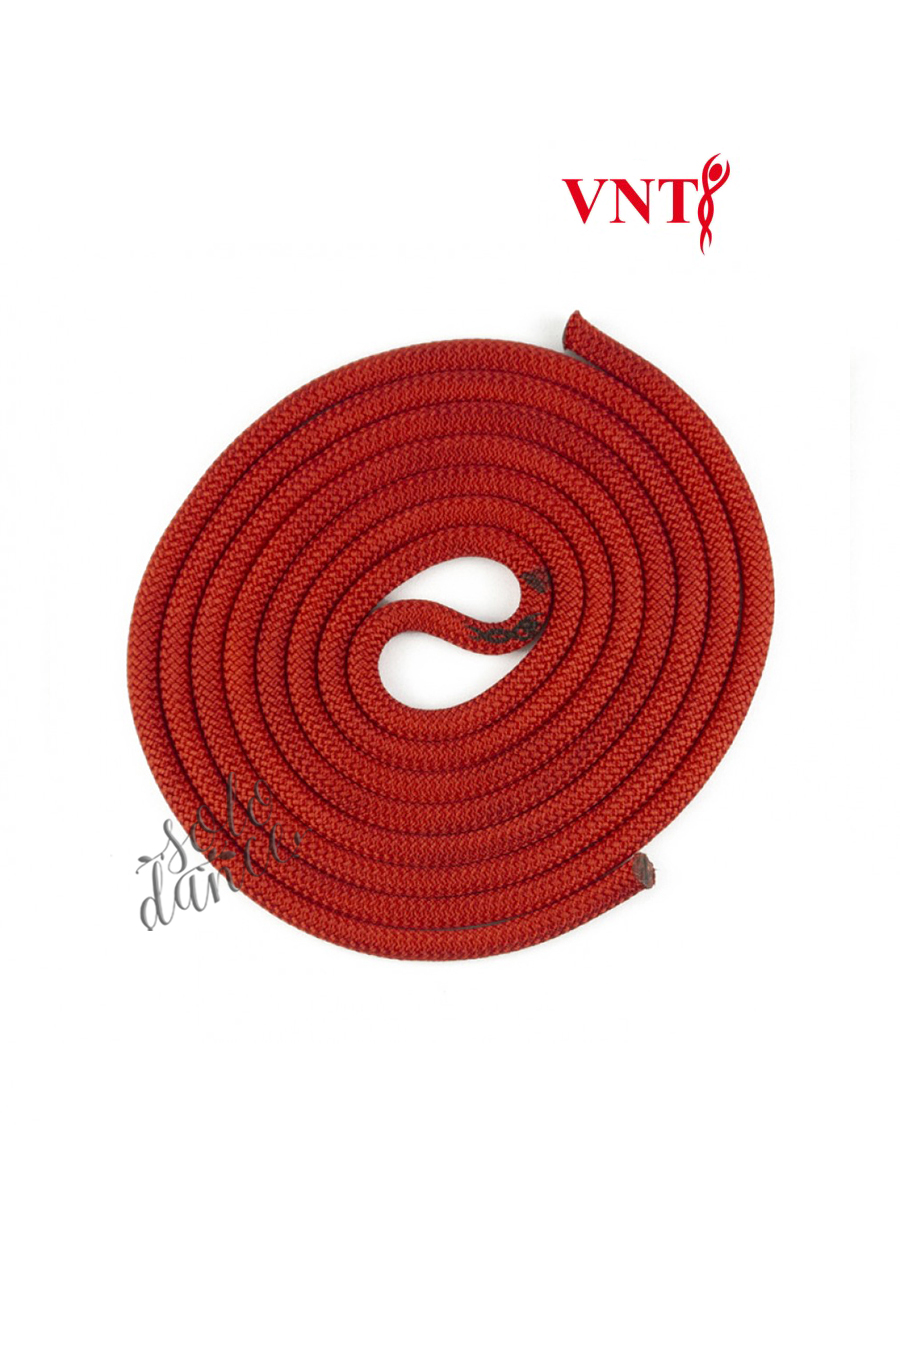 Rope Venturelli for rythmic gymnastic PL2-016 Red